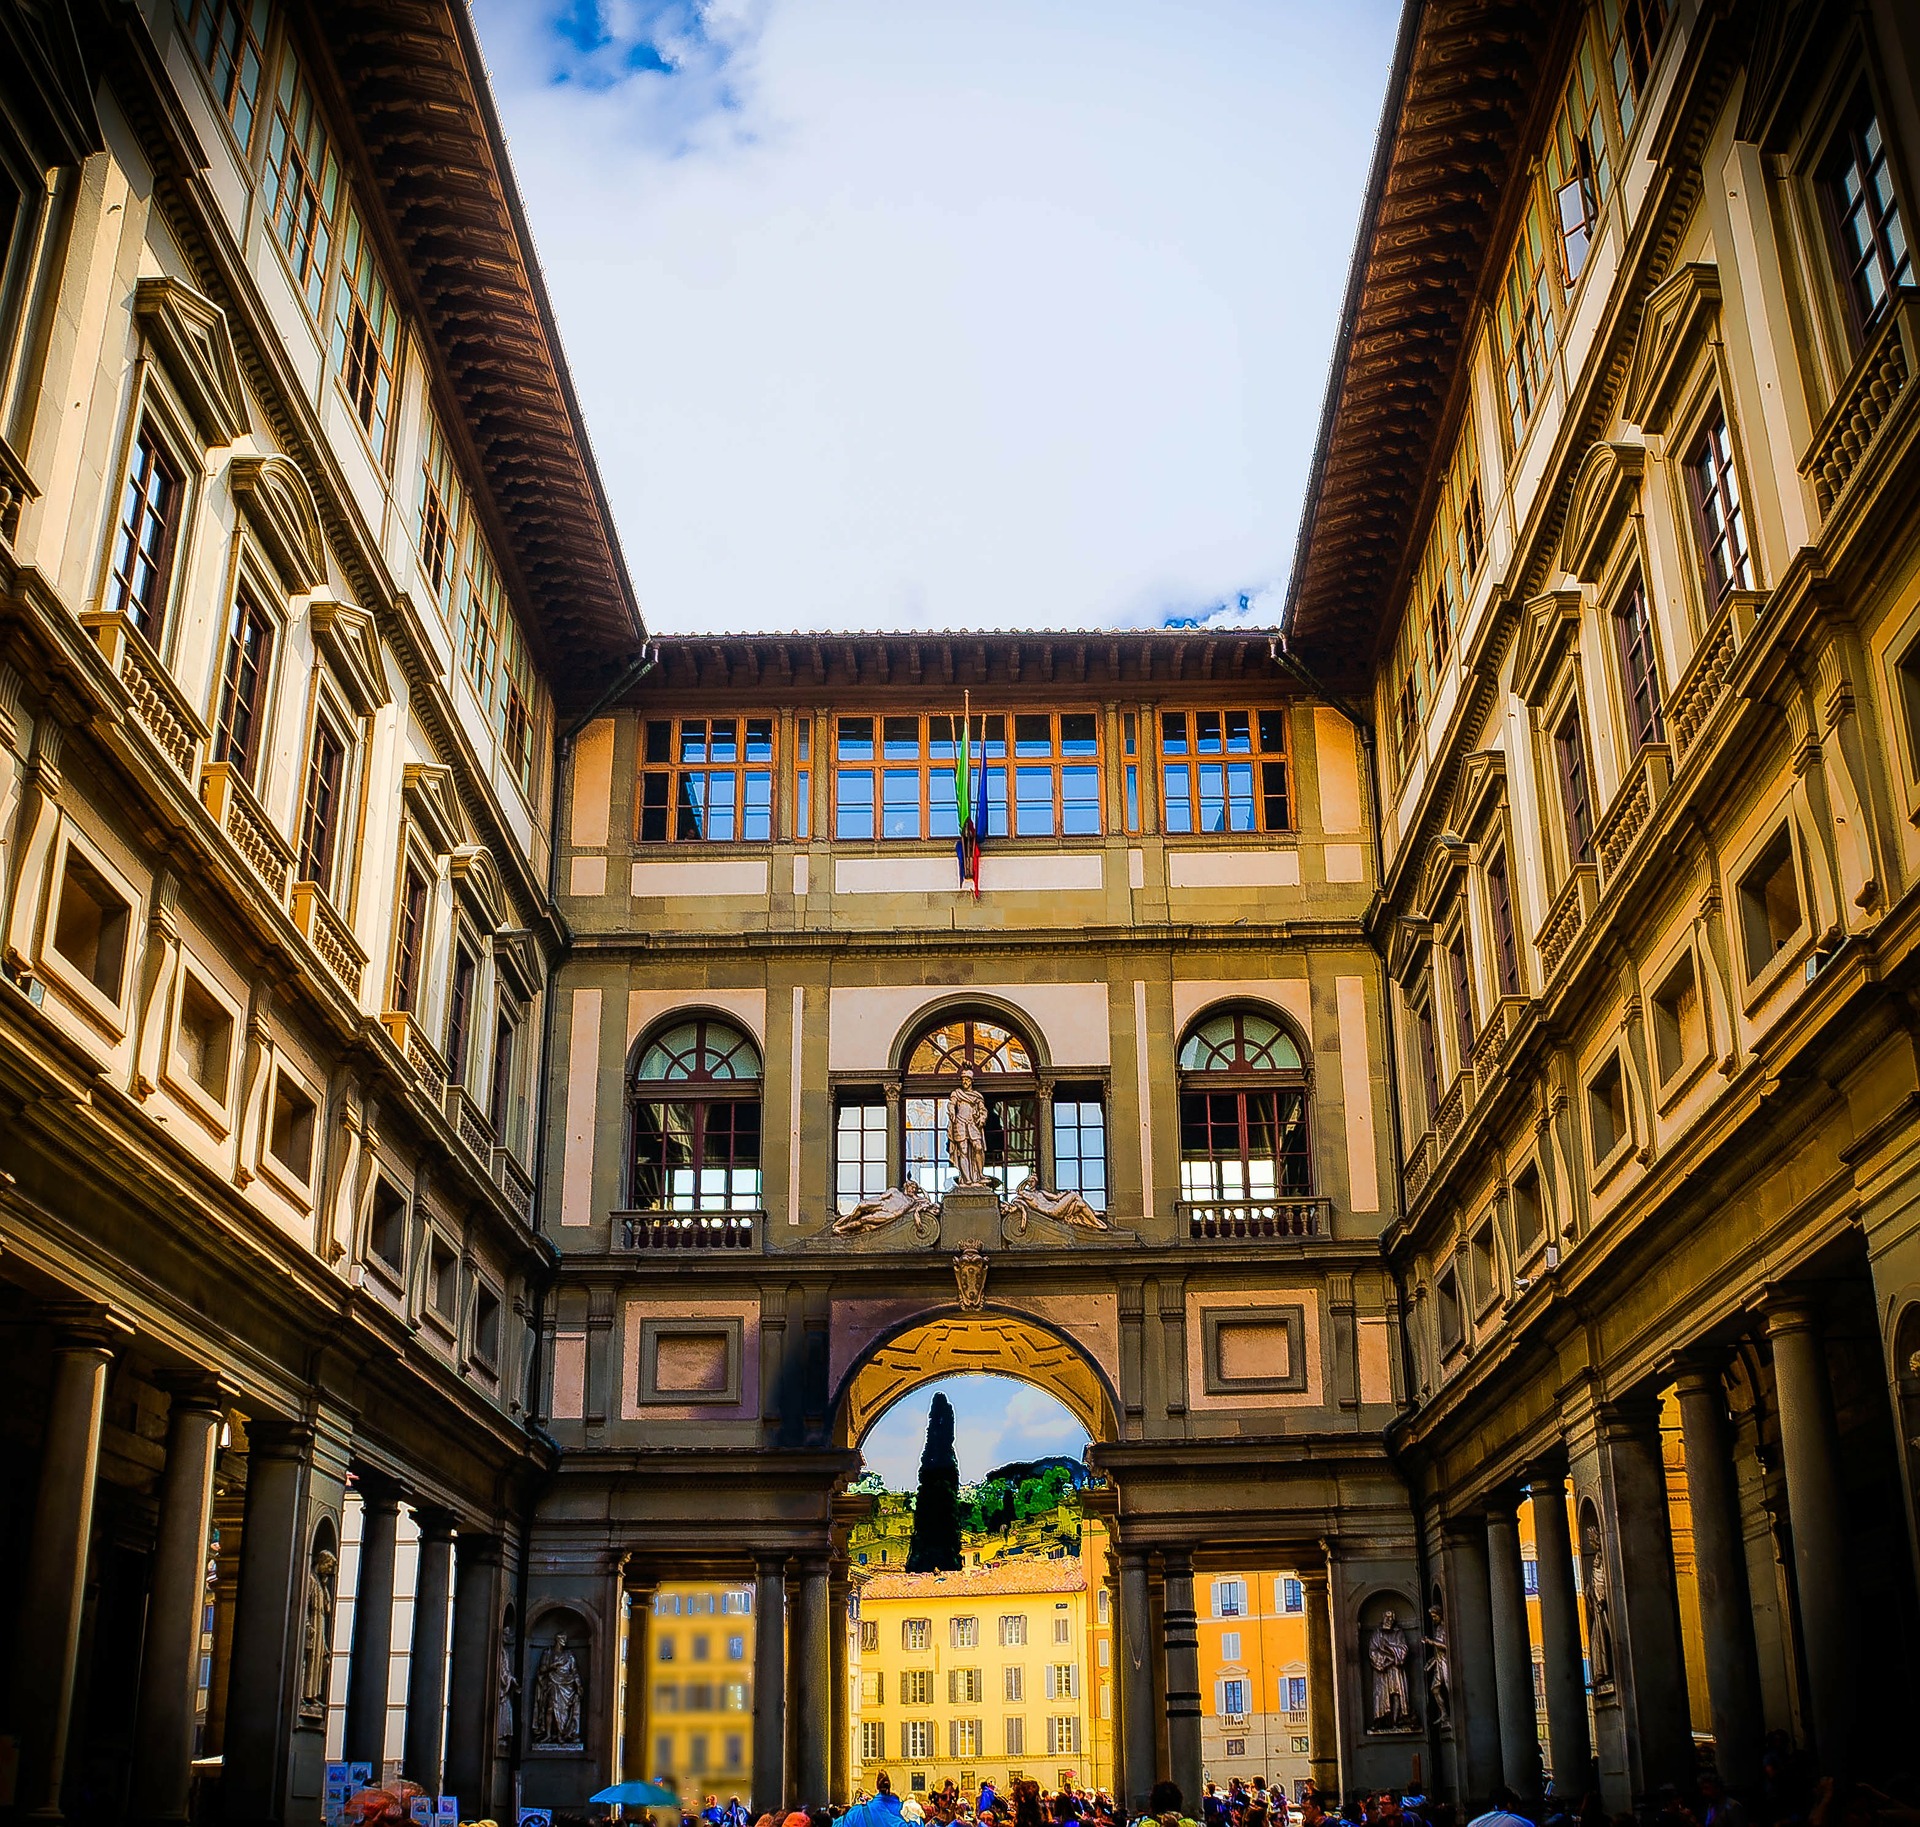 Uffizi Gallery in Florence